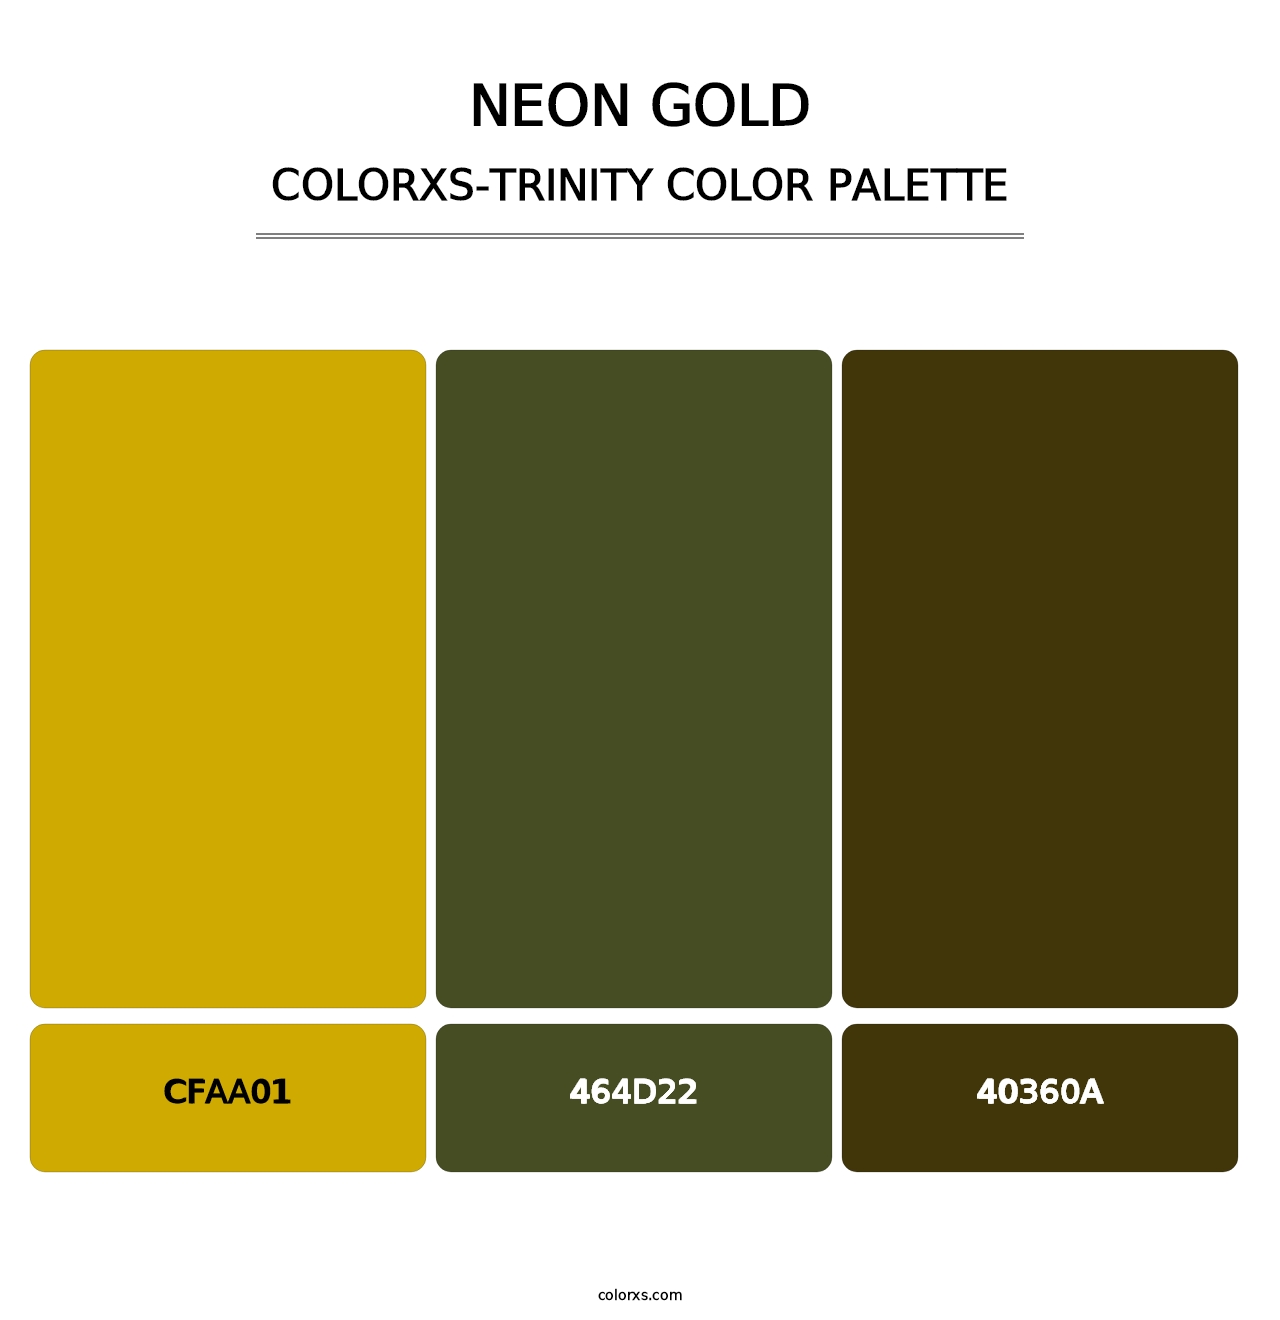 Neon Gold - Colorxs Trinity Palette